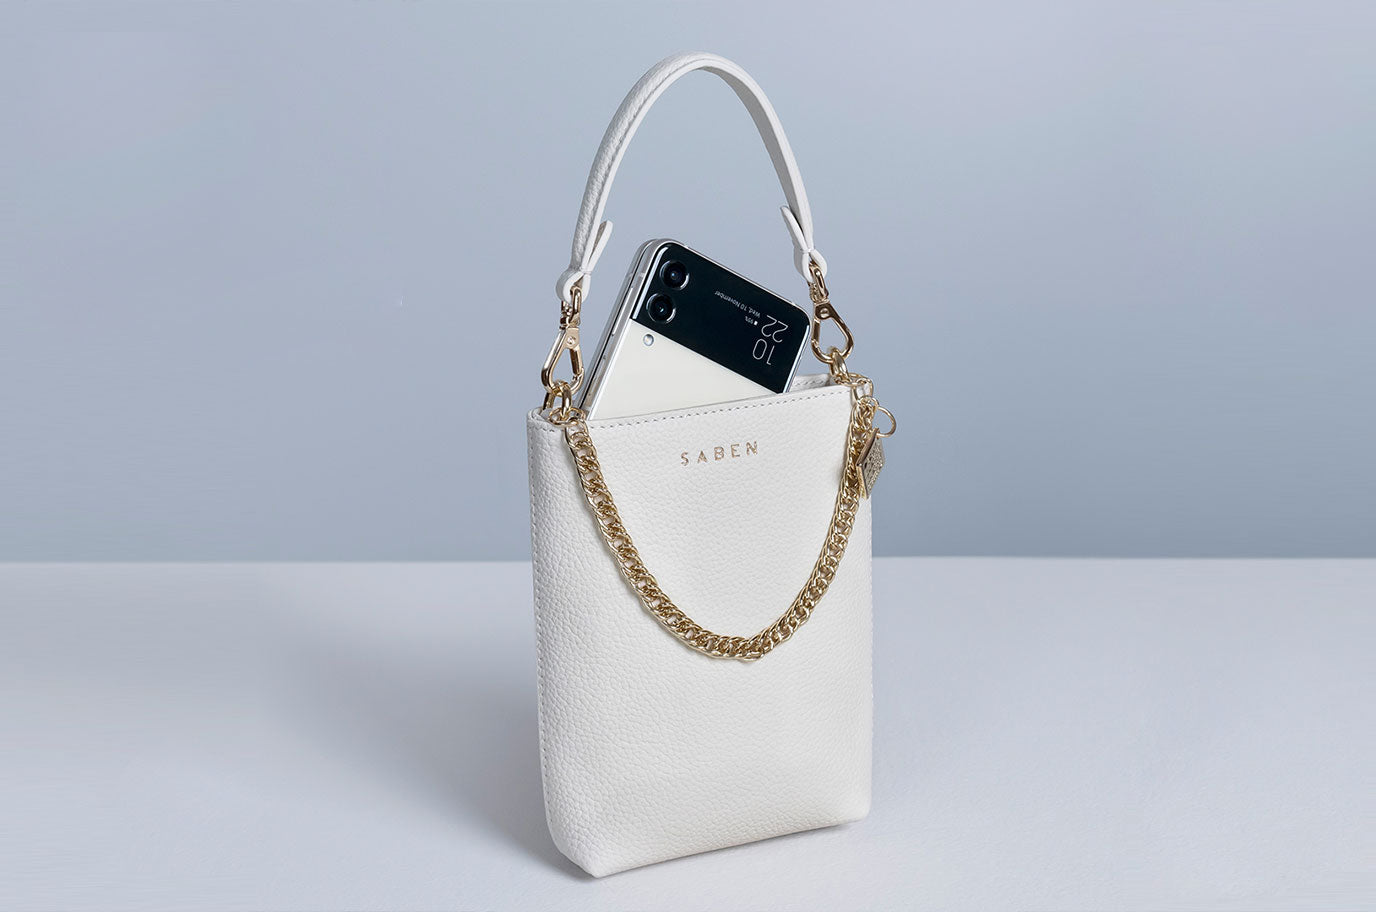 saben and samsung collaboration the sarah handbag for the Galaxy Z Flip3 5G